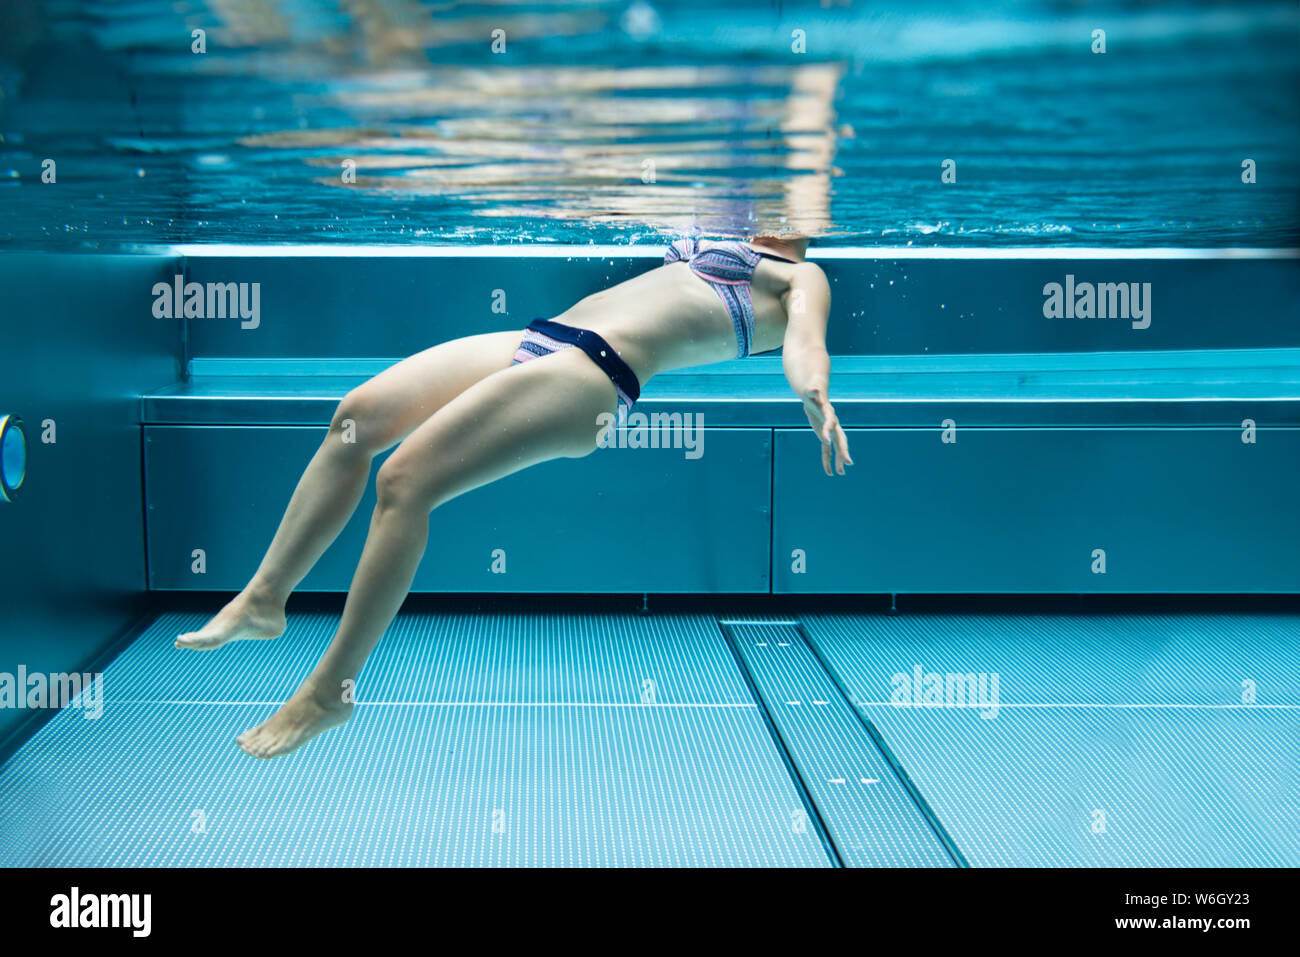 Below Water Photo Of Woman Swimming In Pool In Stock Photo